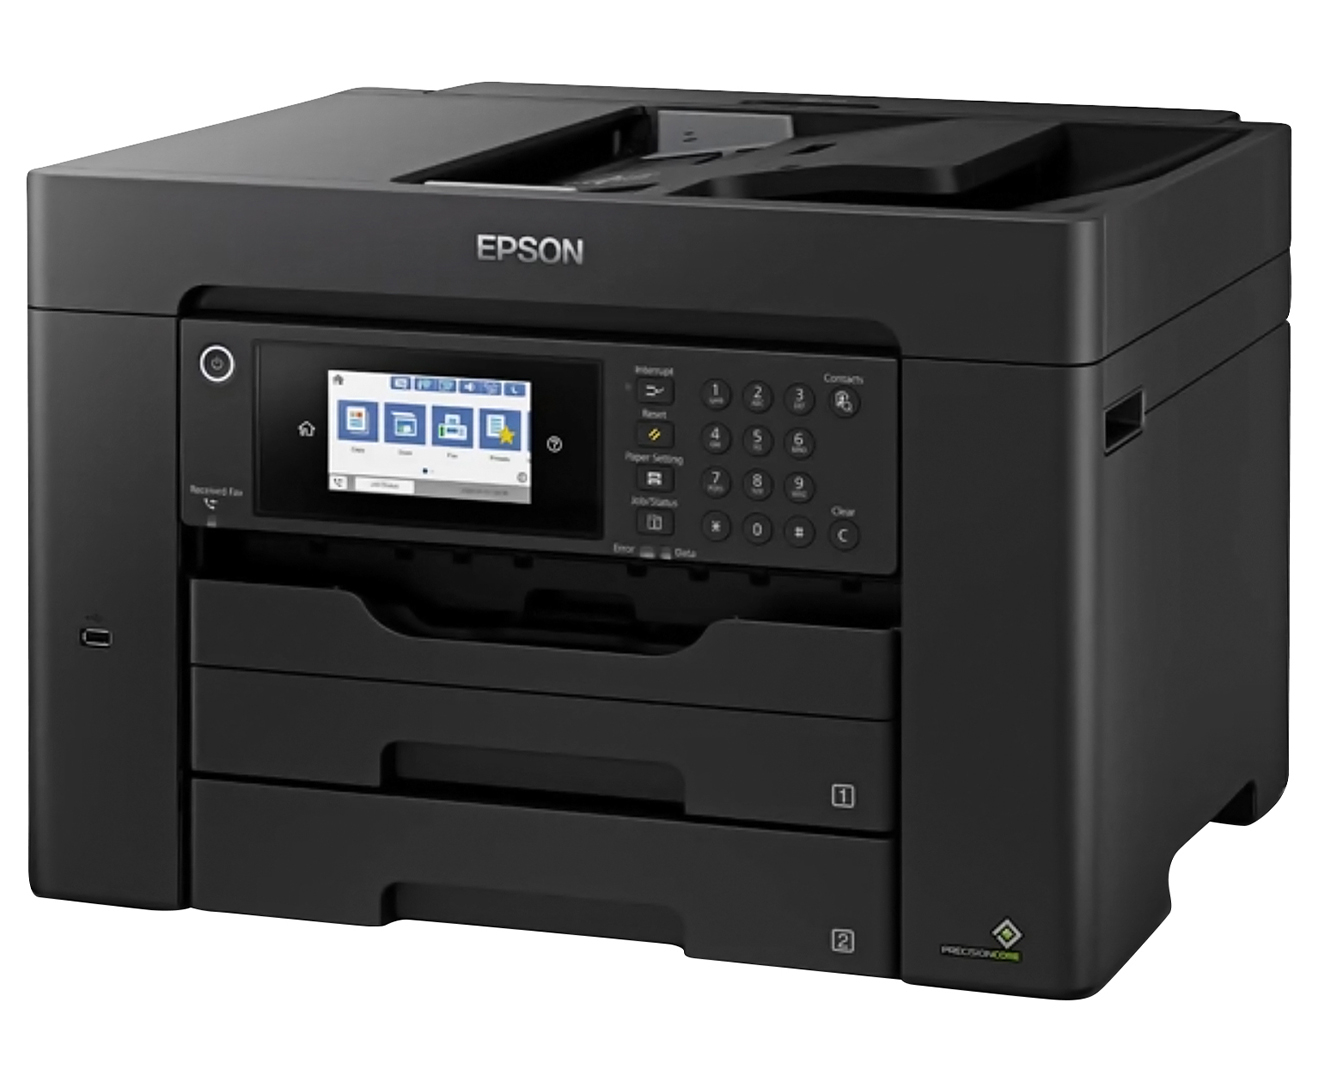 Epson Wf 7845 Workforce Wireless Inkjet Multi Function Printer Nz 2914